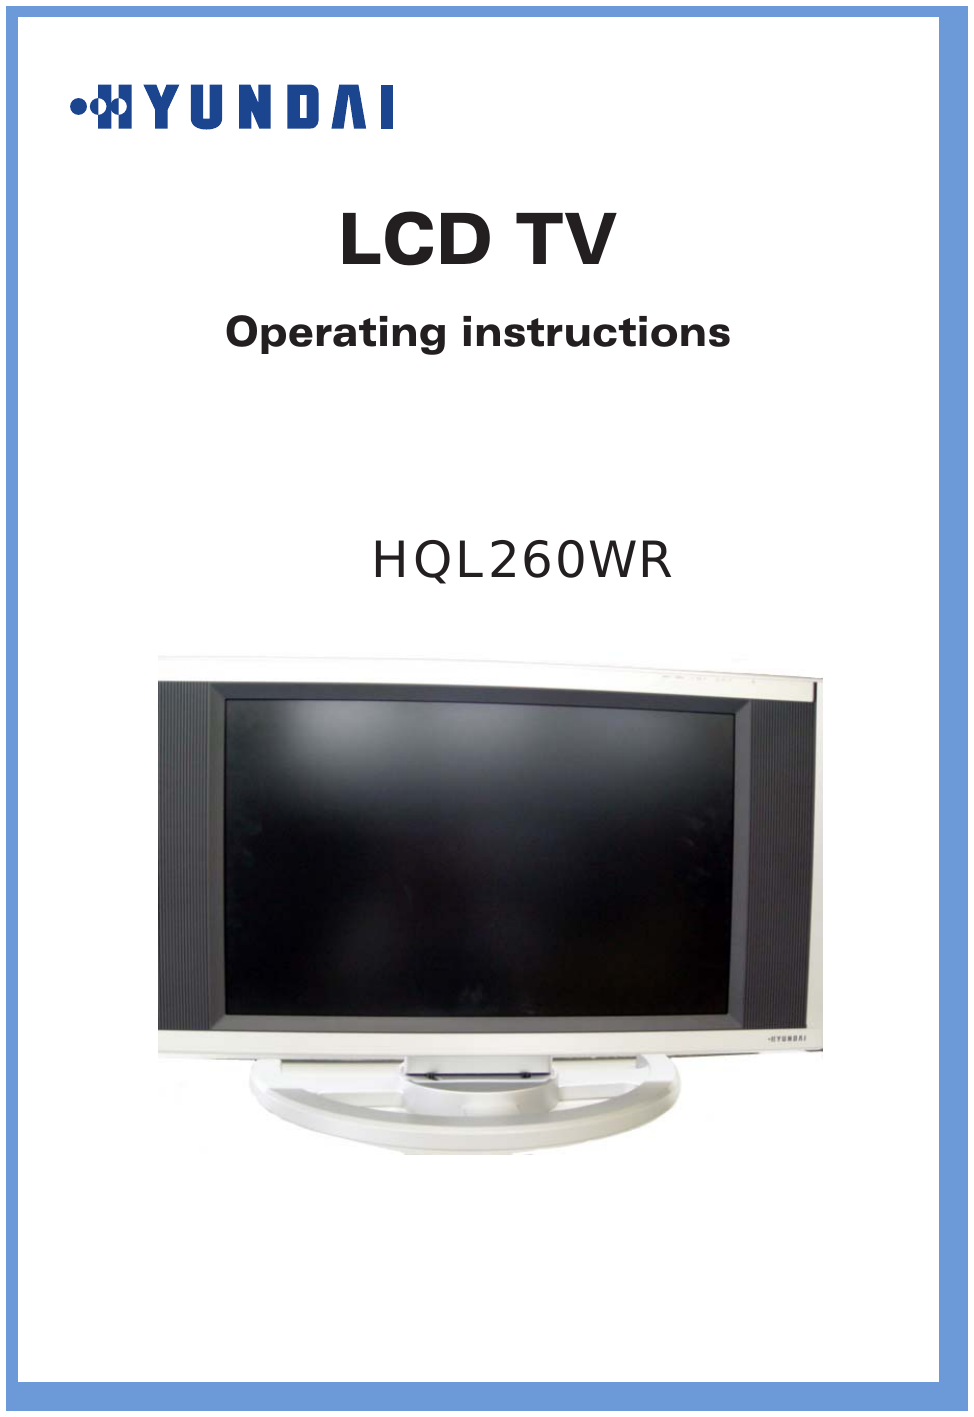 HQL260WRLCD TVOperating instructions